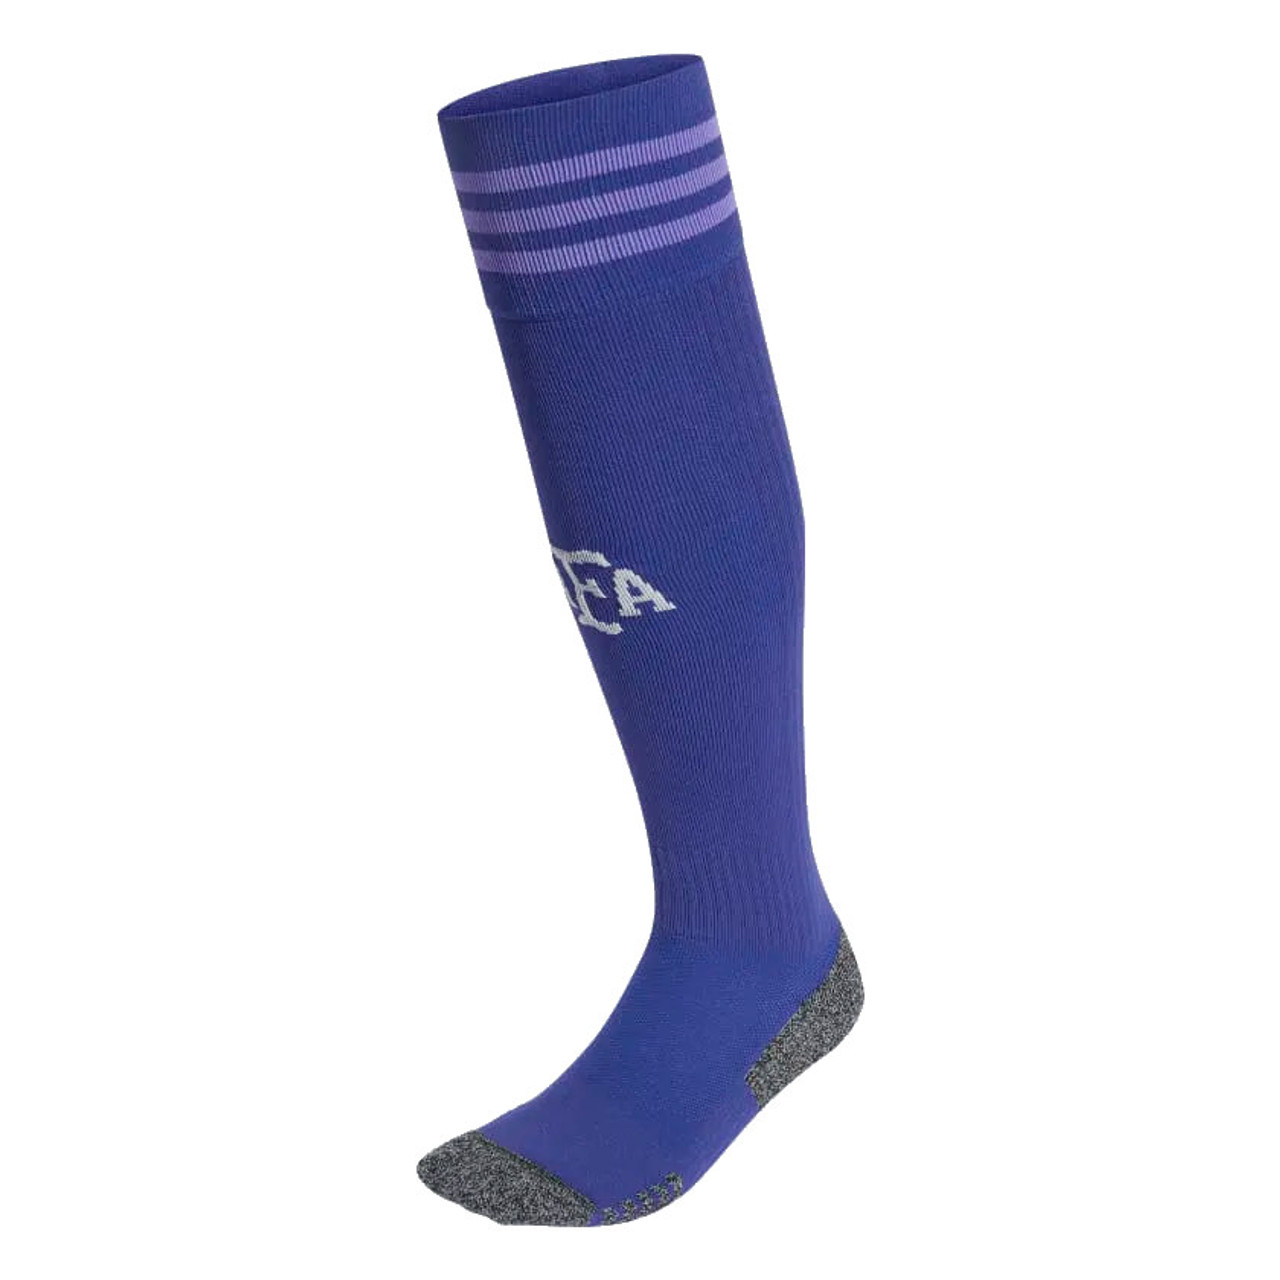 Adidas Argentina Alternative Football Socks - Various Sizes Available 2023